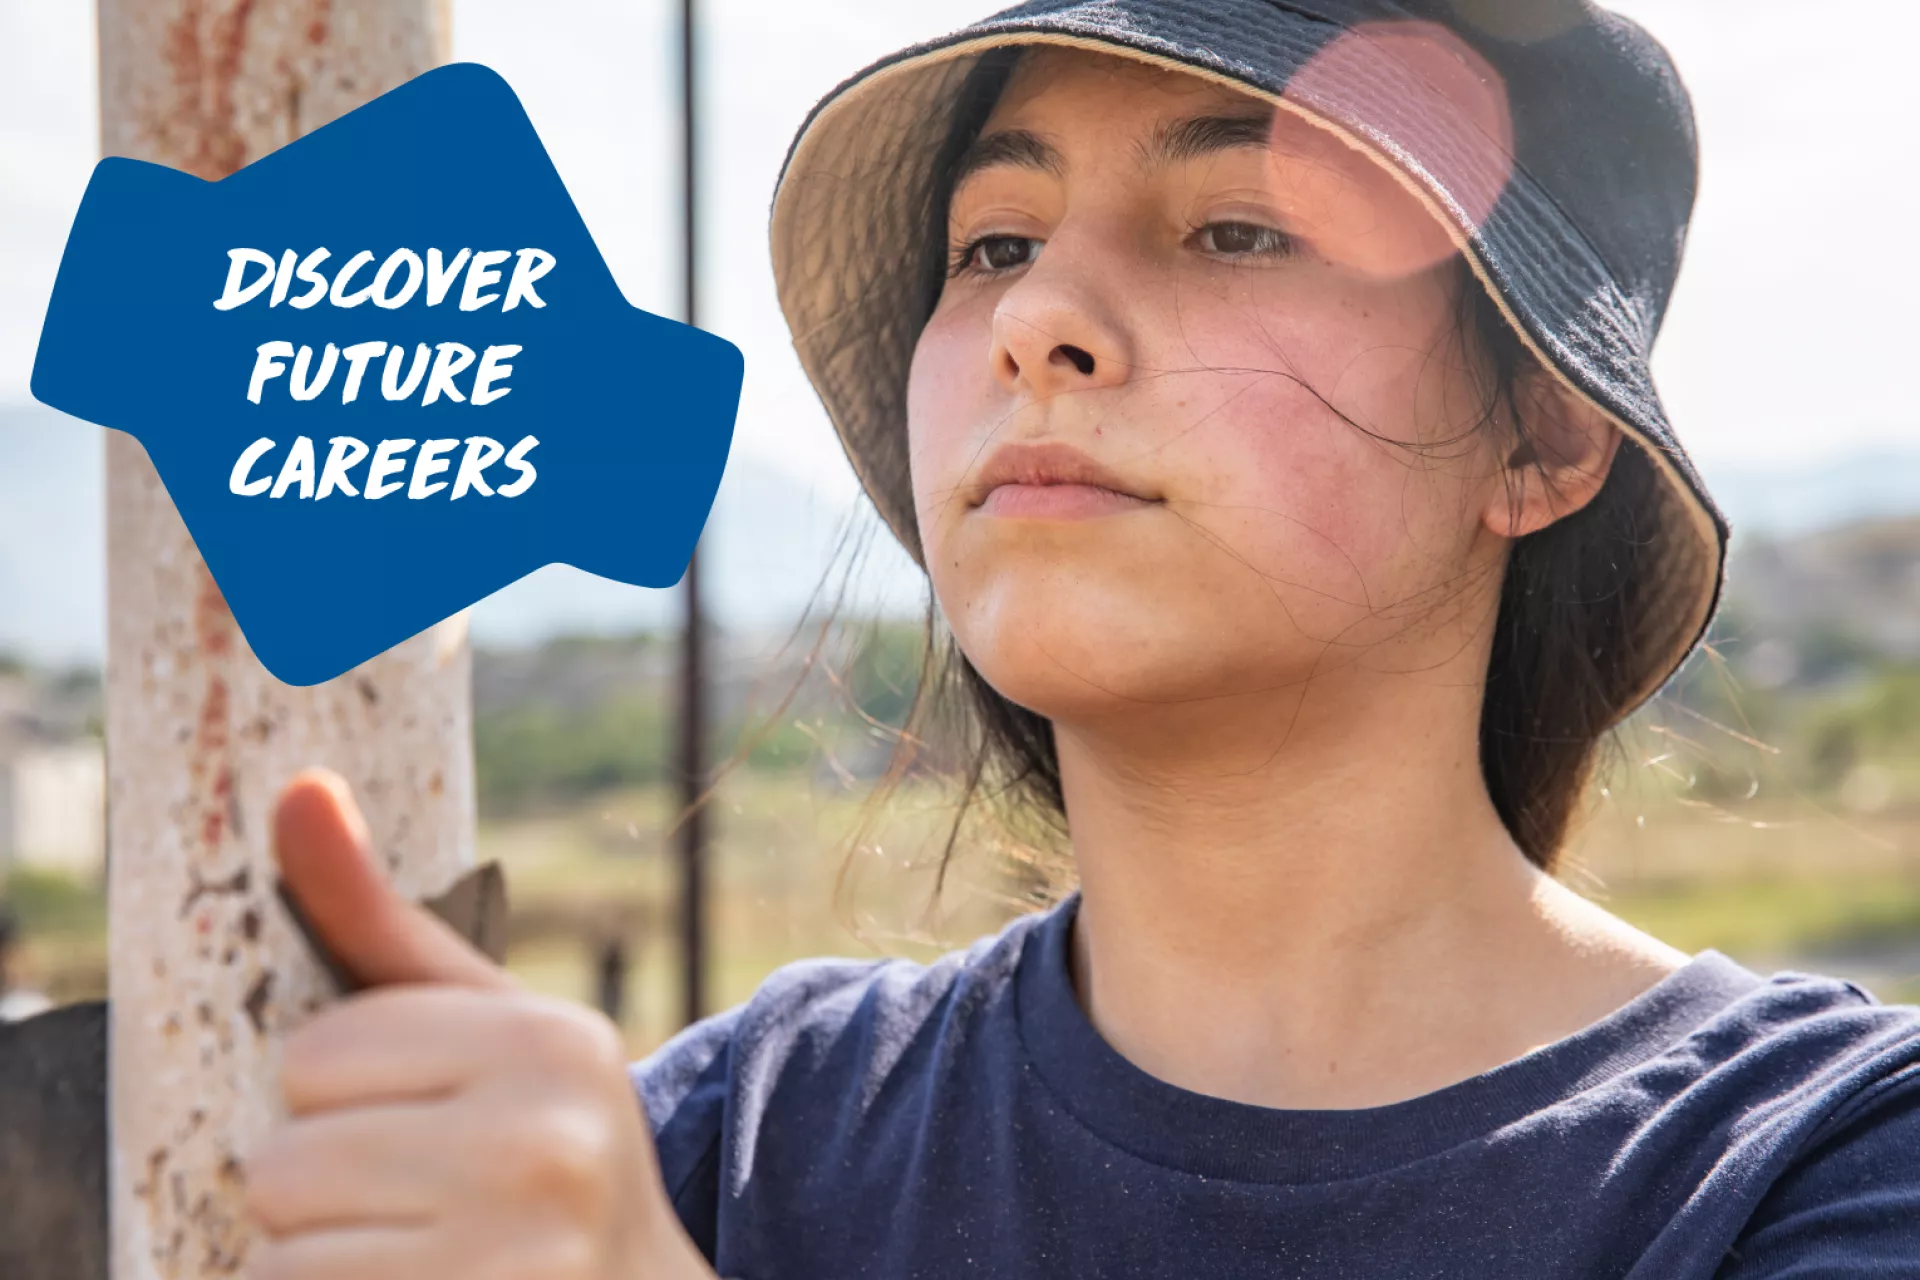 discover future careers